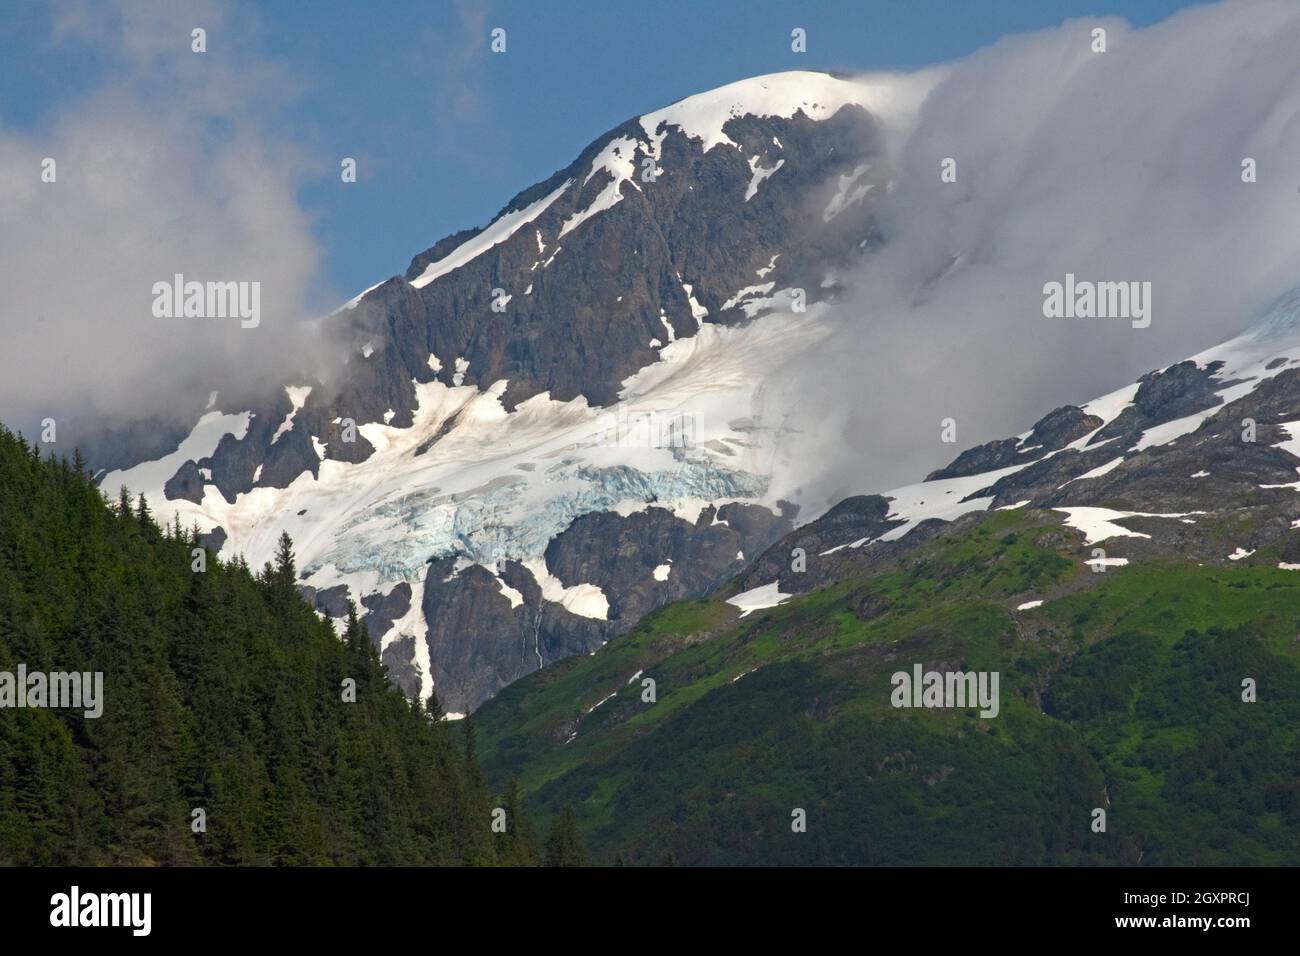 Montaña nevada entre nubes bajas, Cordova, Alaska, Estados Unidos Foto de stock